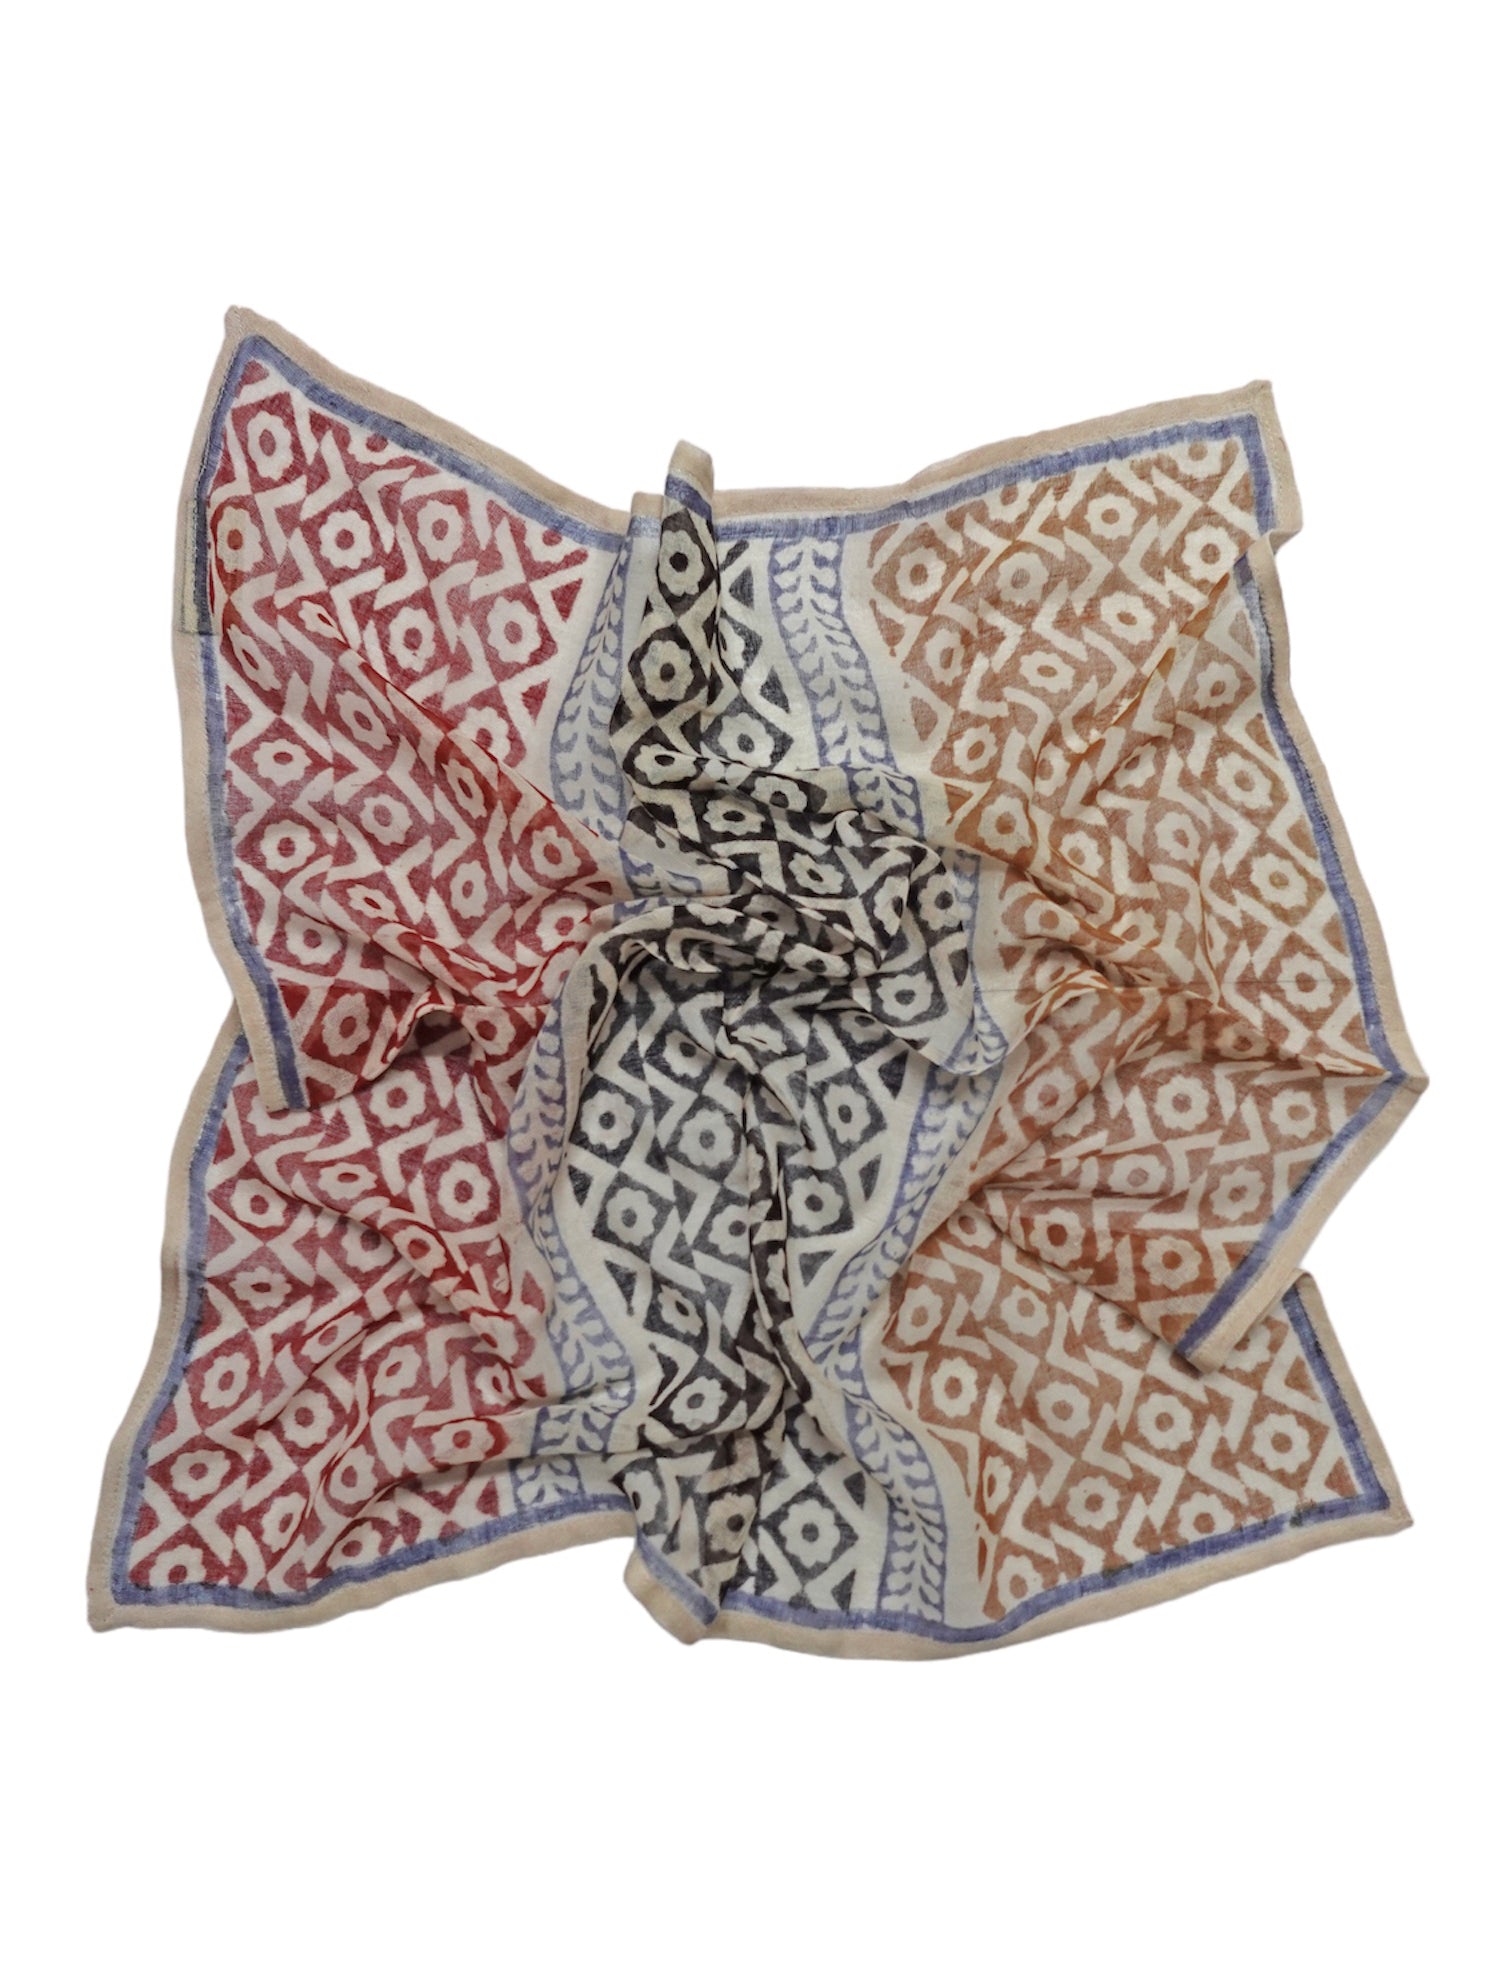 Block printed geometric and floral print Roma bandana, laid flat against a white background